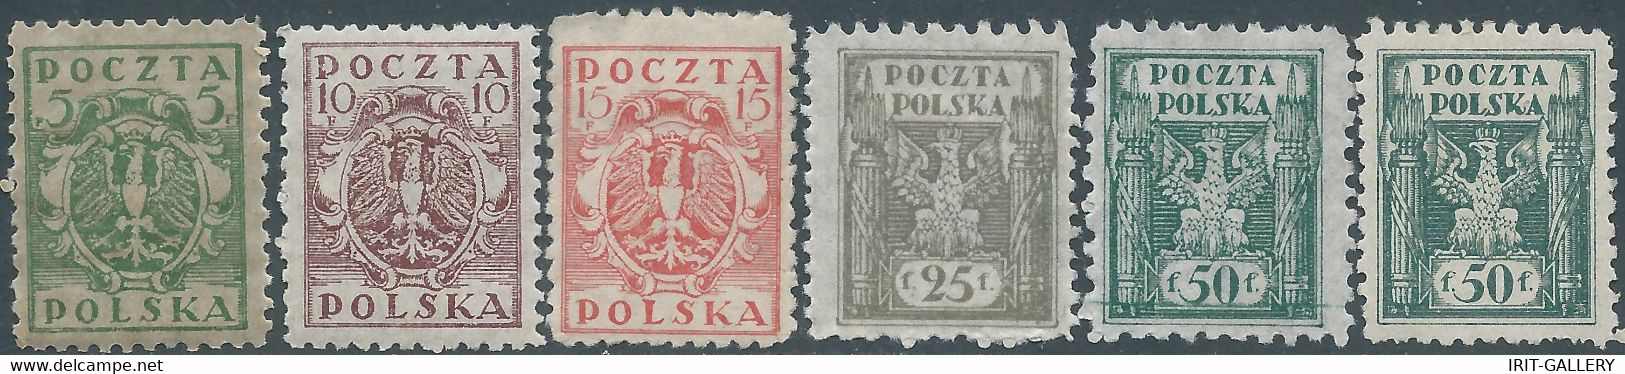 POLONIA-POLAND-POLSKA,1919 North Poland Issues,Mint - Nuevos